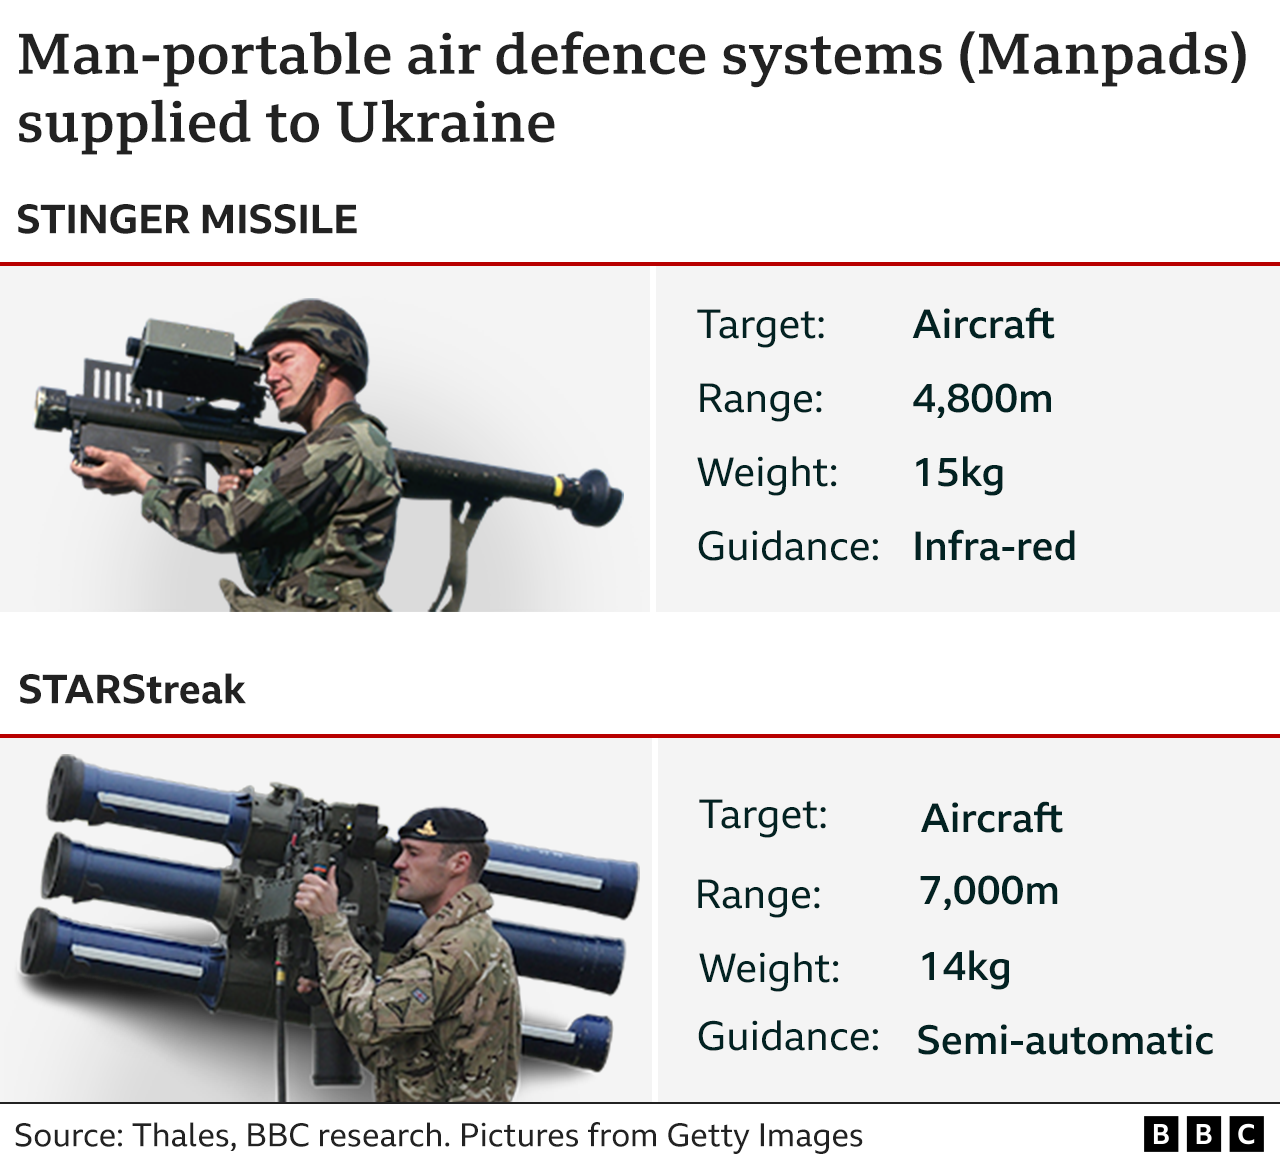 Graphic showing Manpads deployed in Ukraine